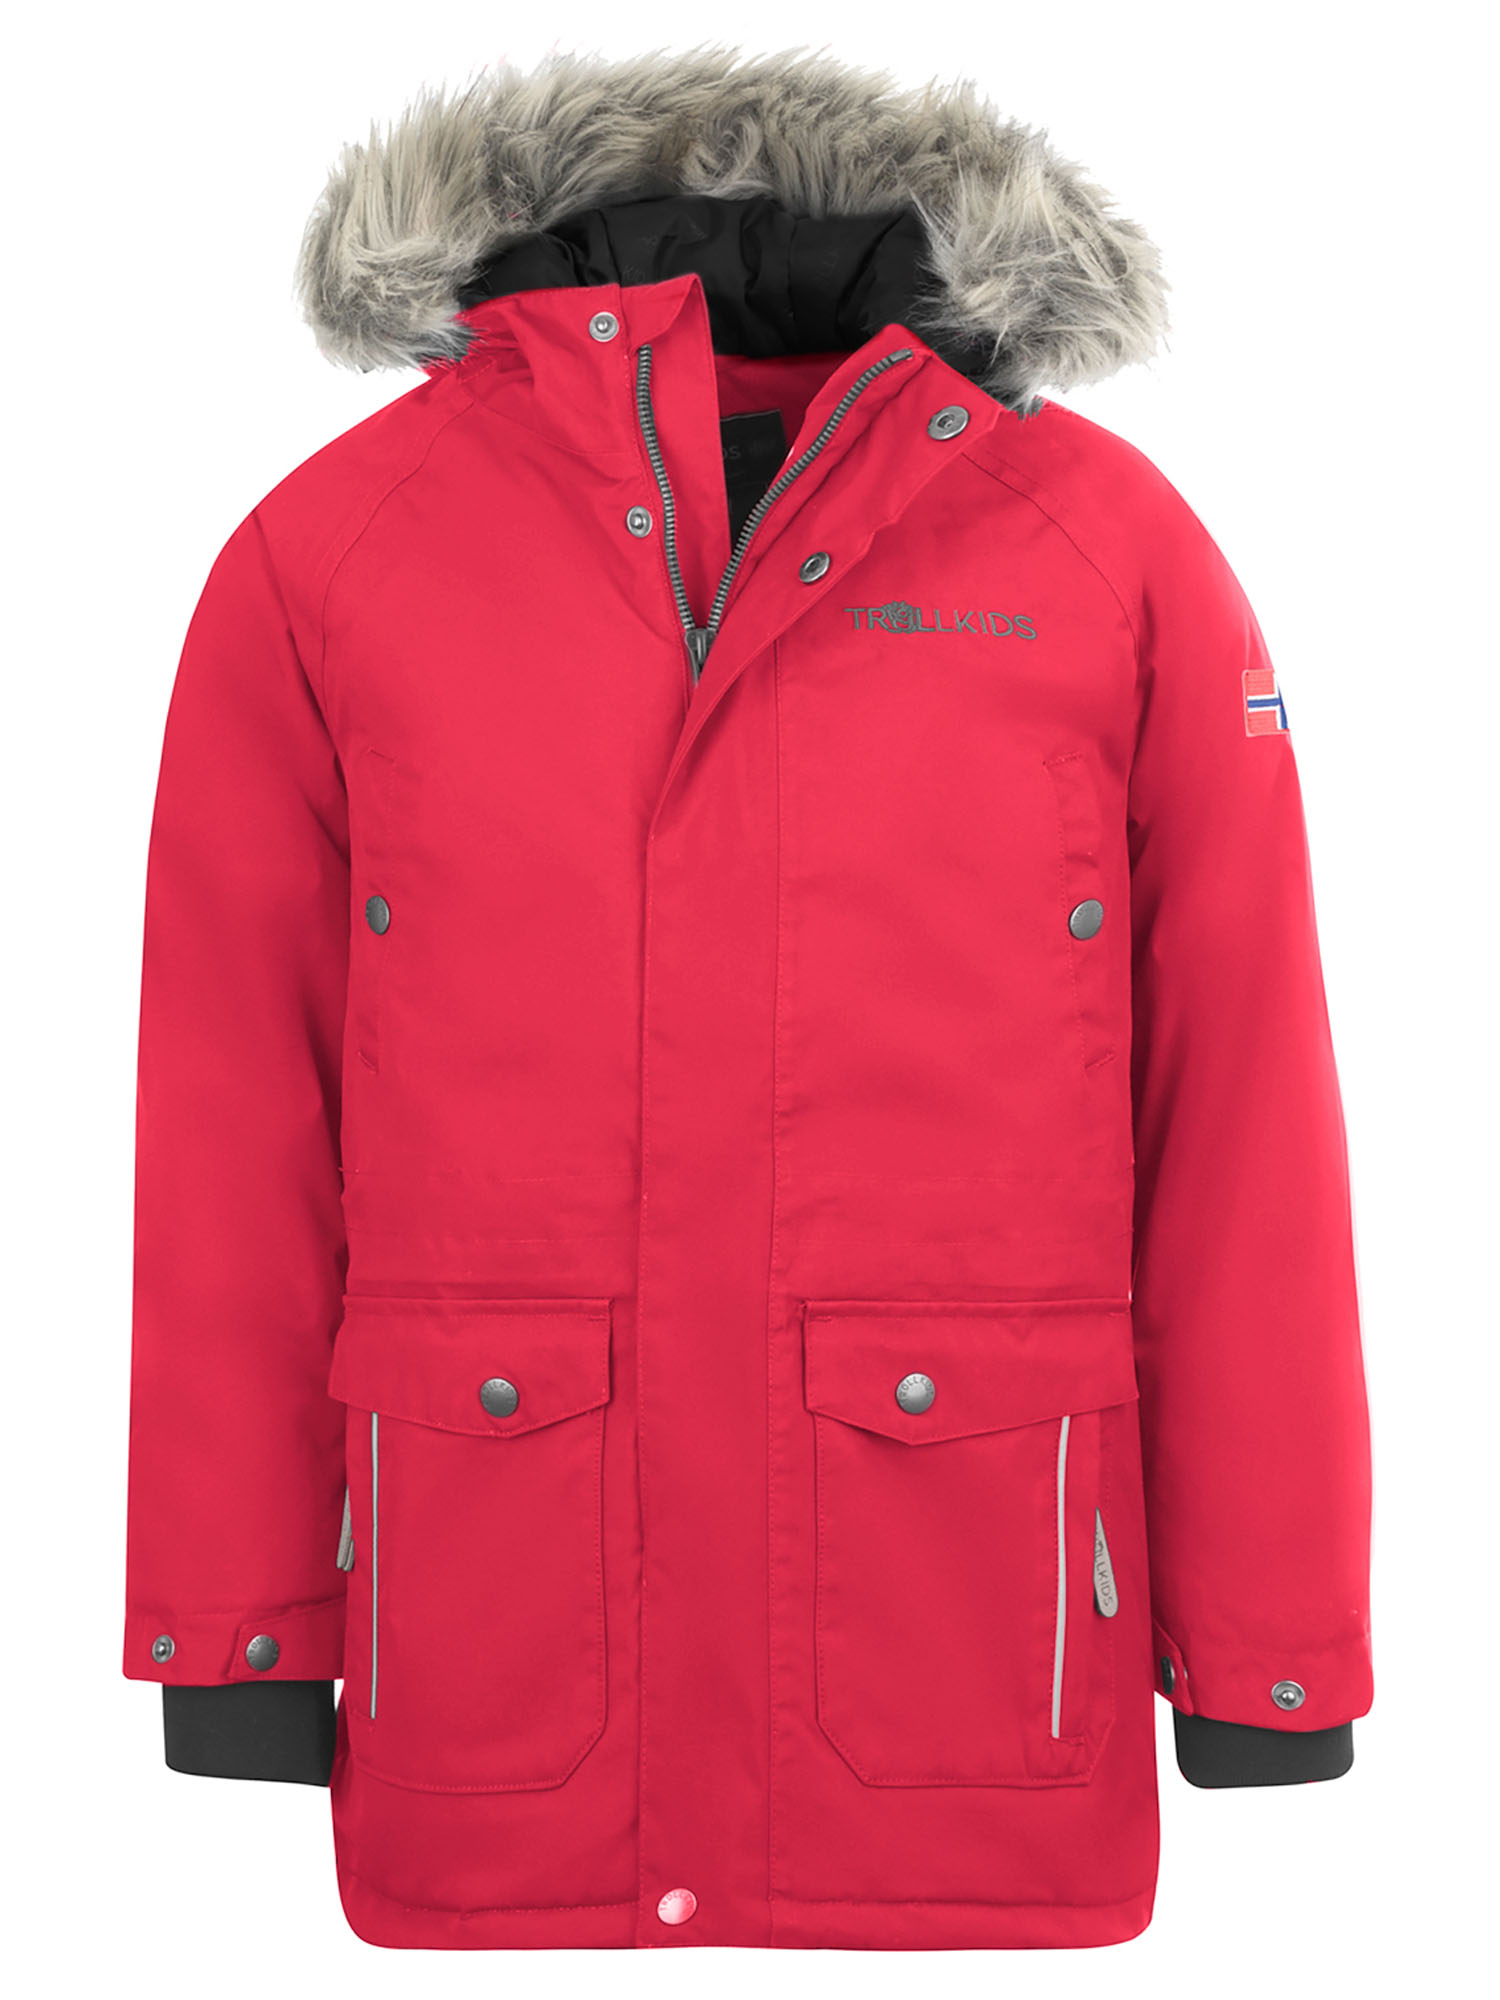 Куртка Детская Trollkids Nordkapp Bright Red (Рост:176) куртка детская roxy snowy tale snow jacket girl s bright white naive rg р 98